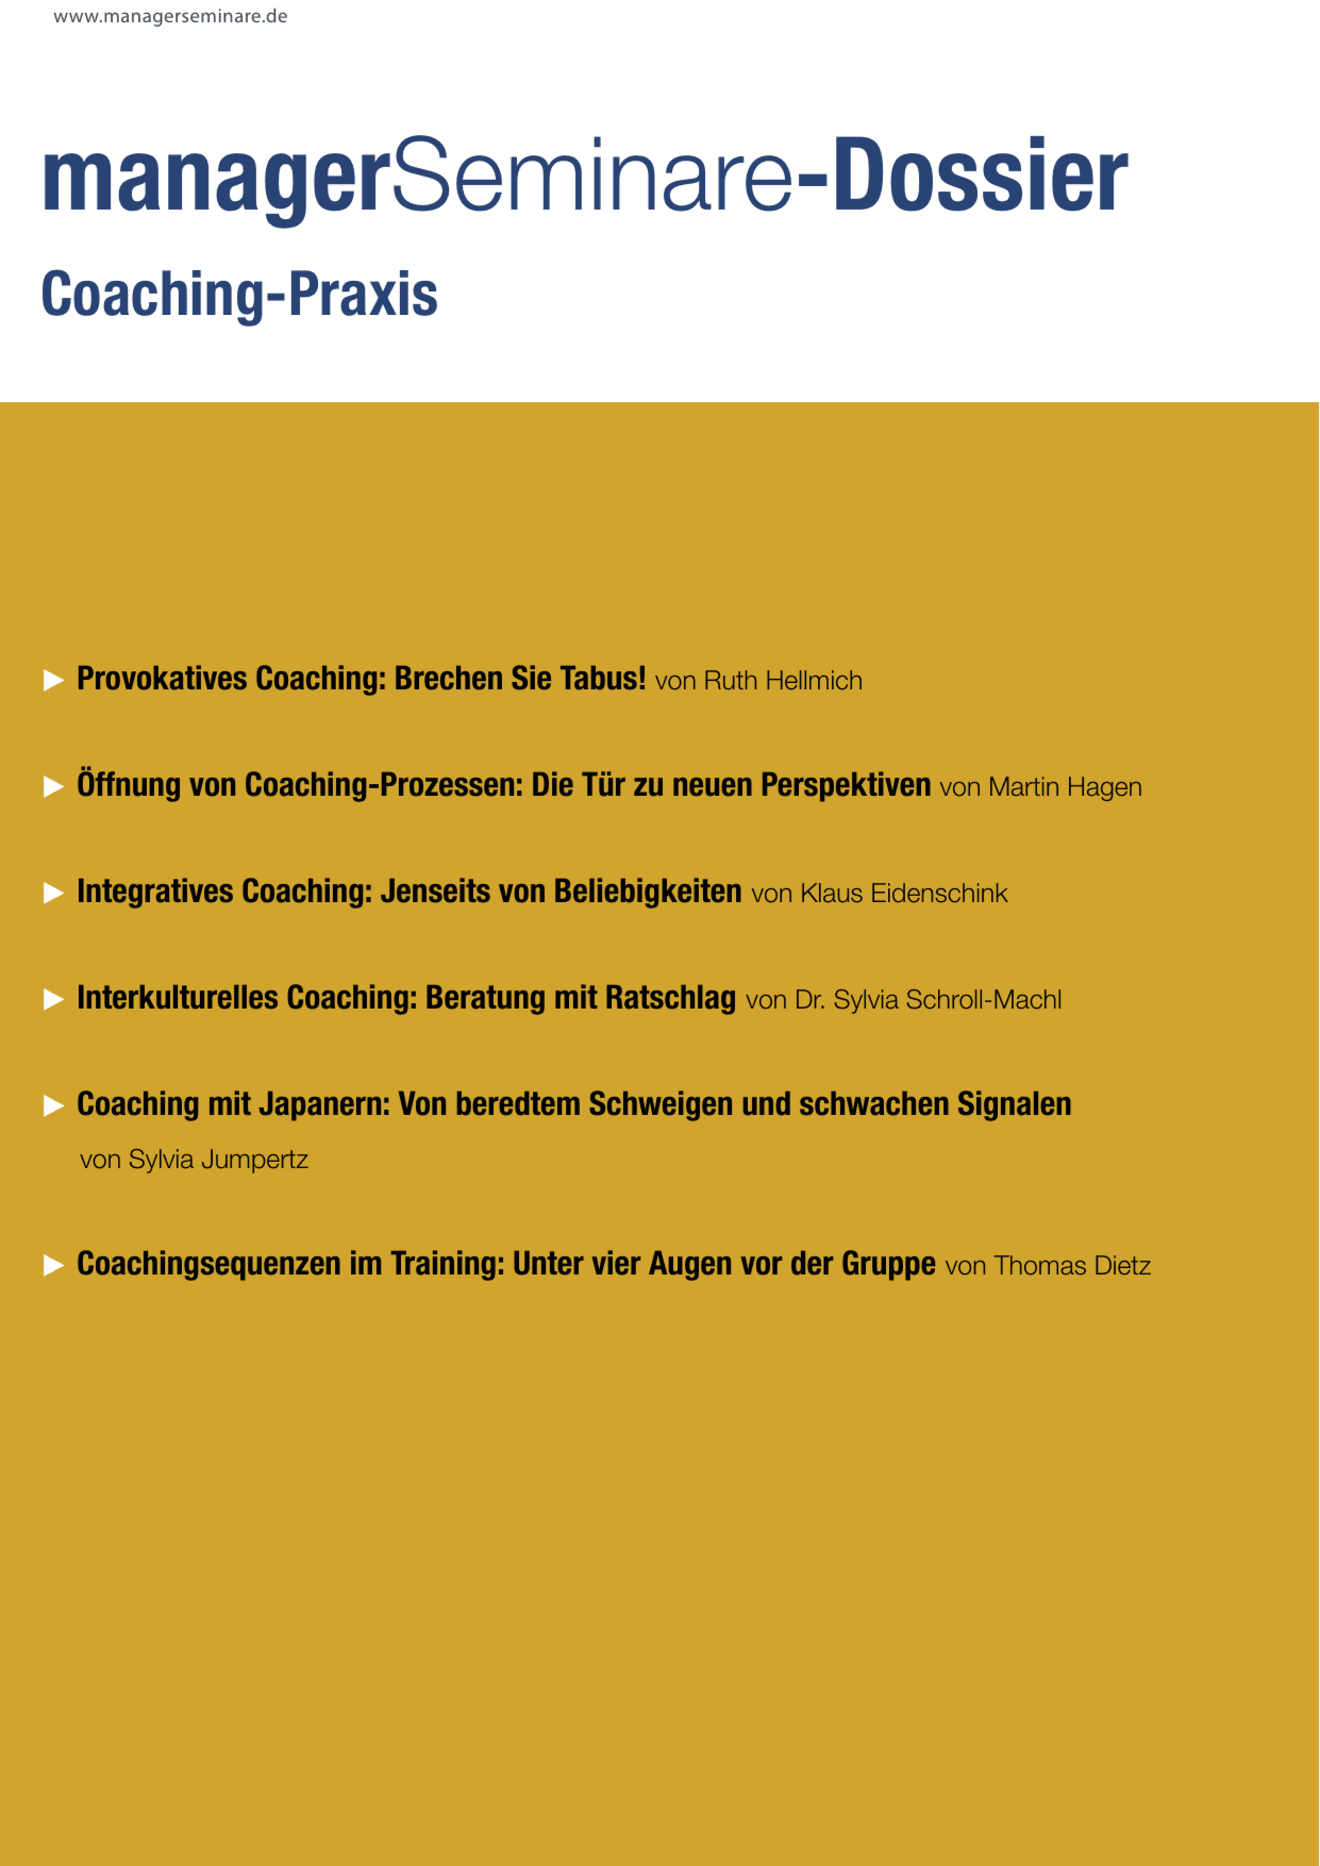 Dossier Coaching-Praxis